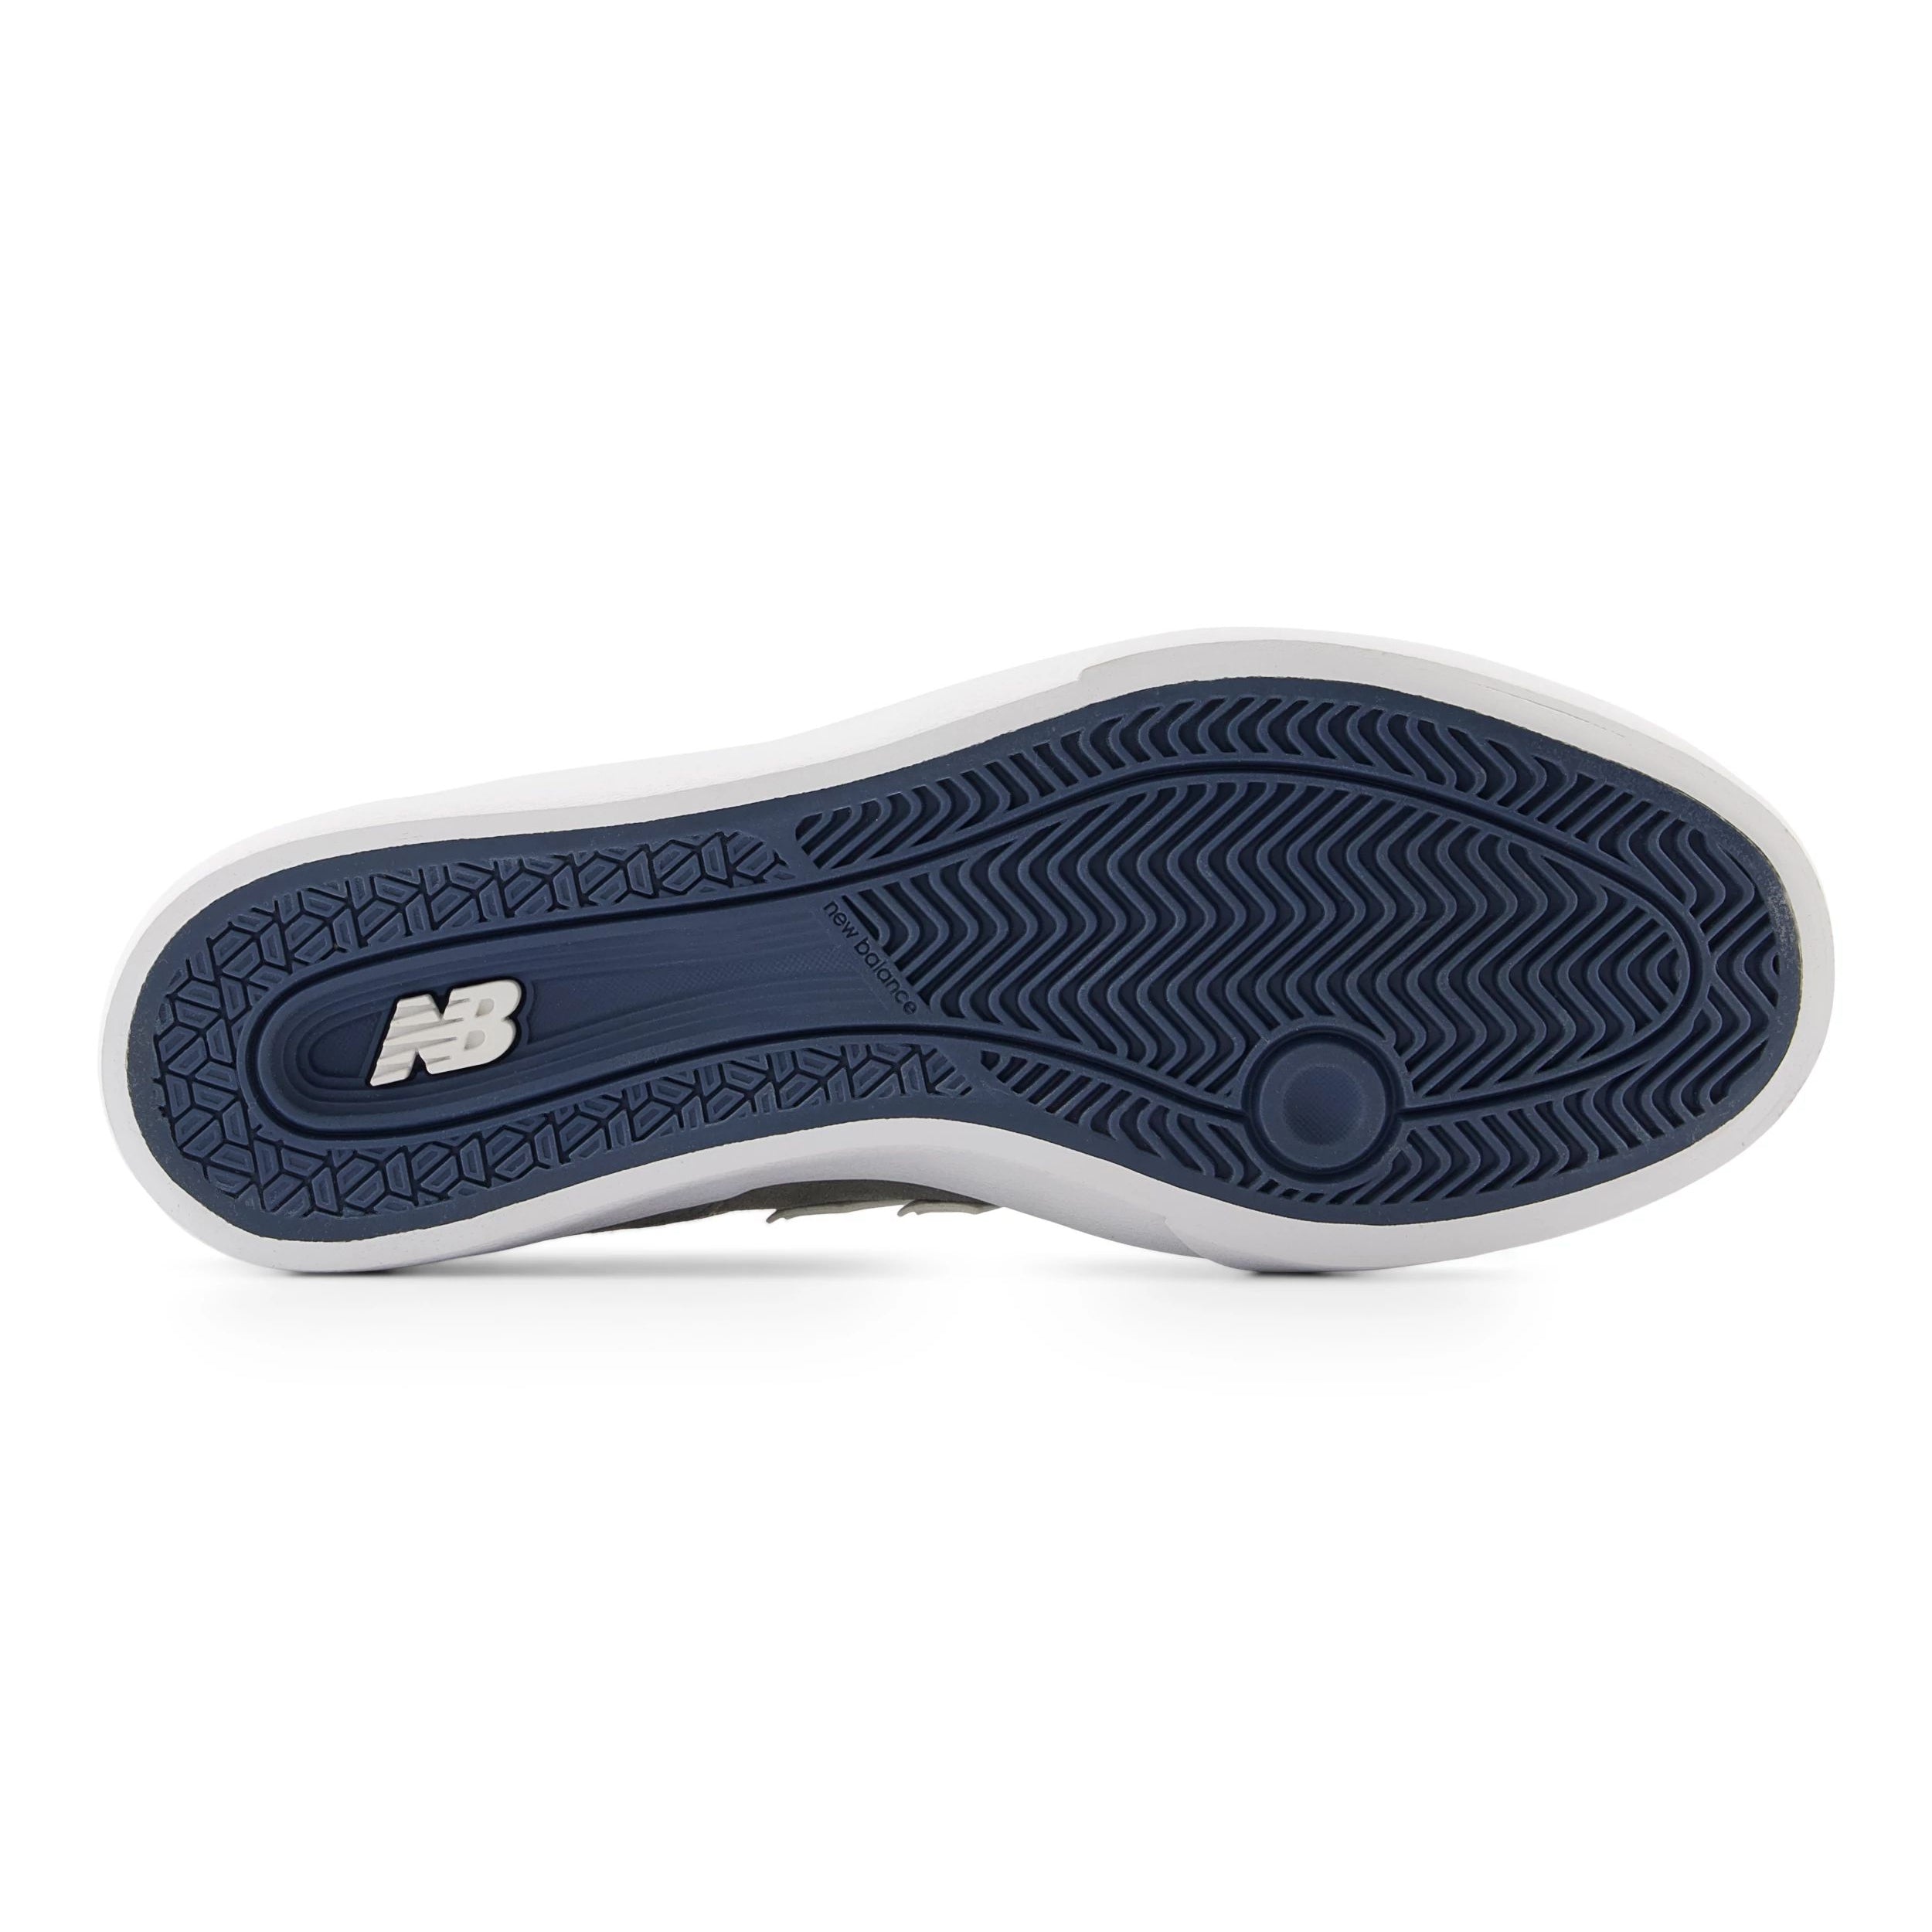 Grey/White NM574 Vulc Wide NB Numeric Skate Shoe Bottom